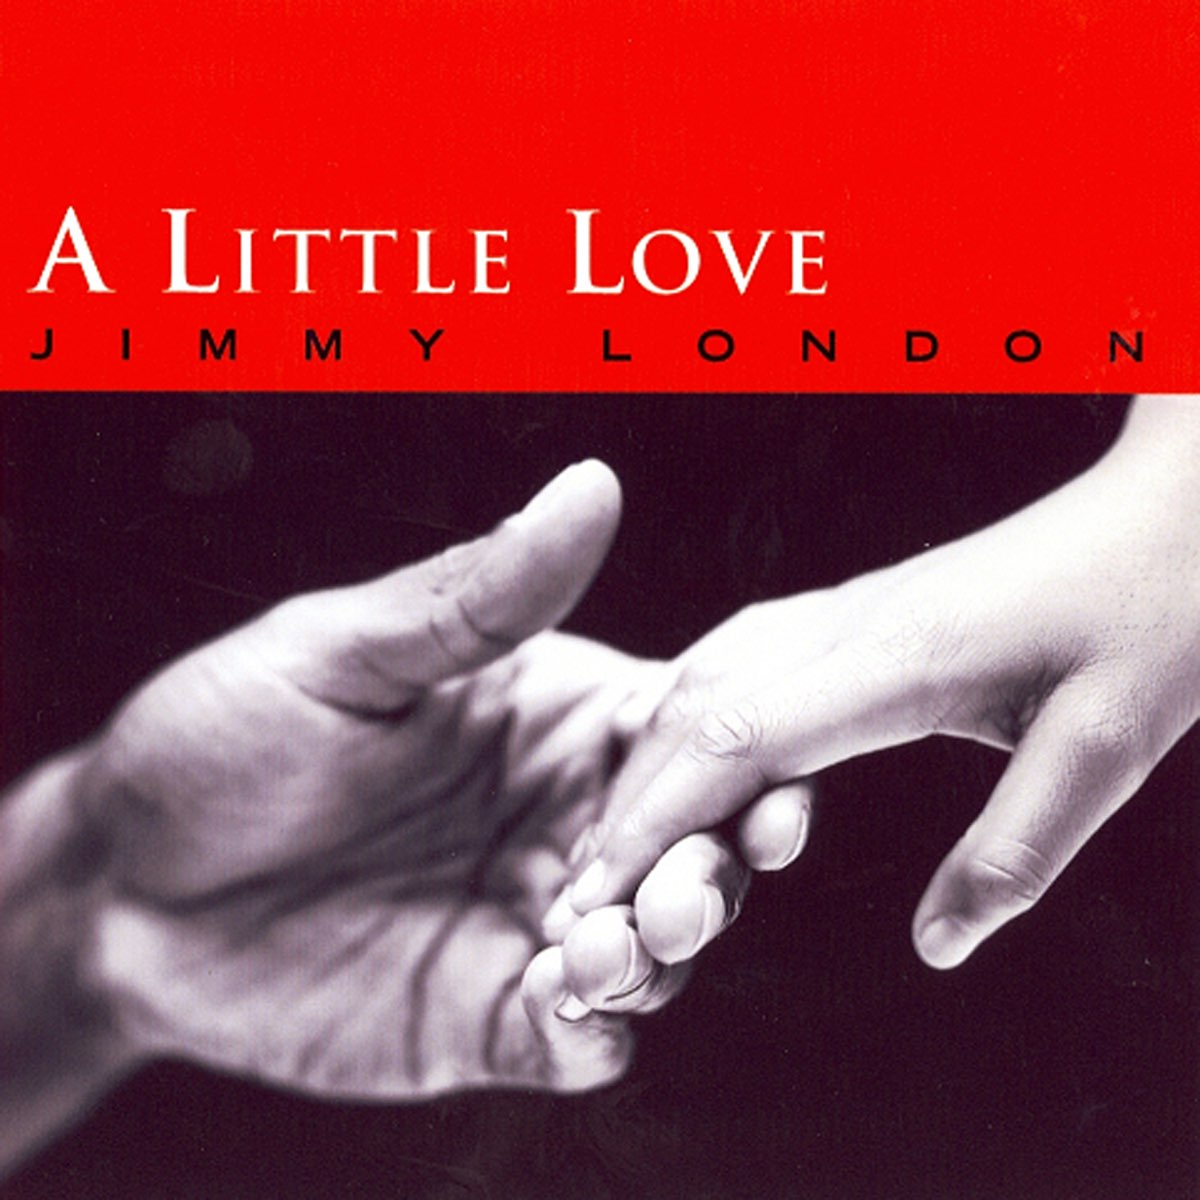 With a little love. Little Love песня. The little things Jimmy. Give us a little Love. Julie London Jimmy Jimmy.